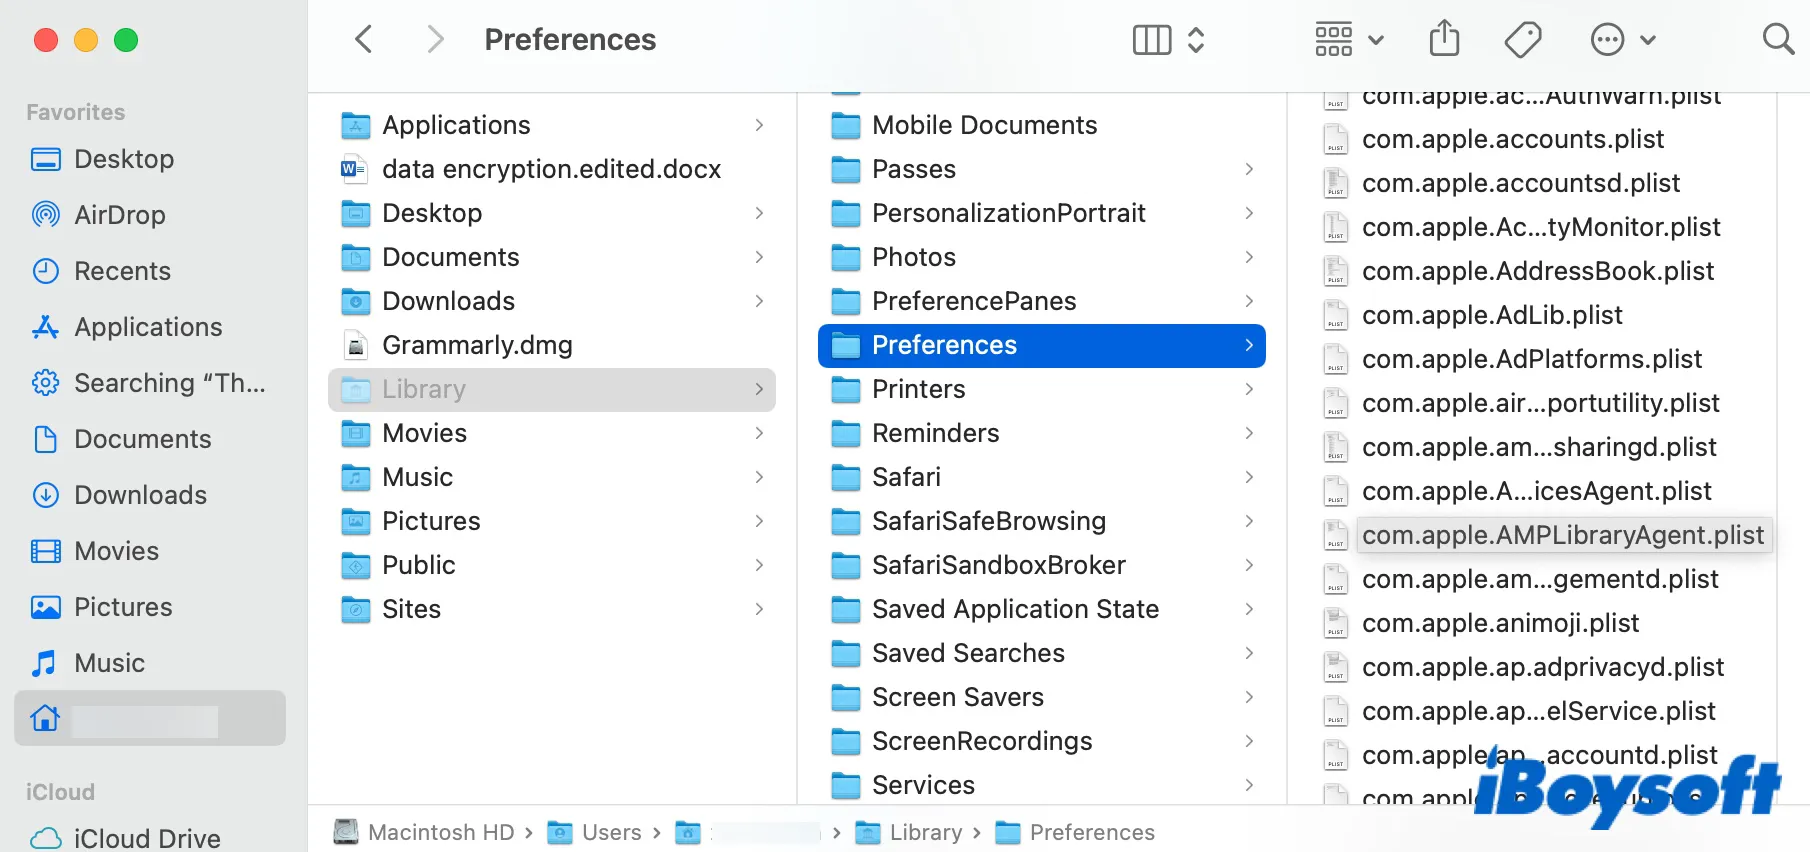 Preferences folder is part of the equivelant of AppData folder on Mac